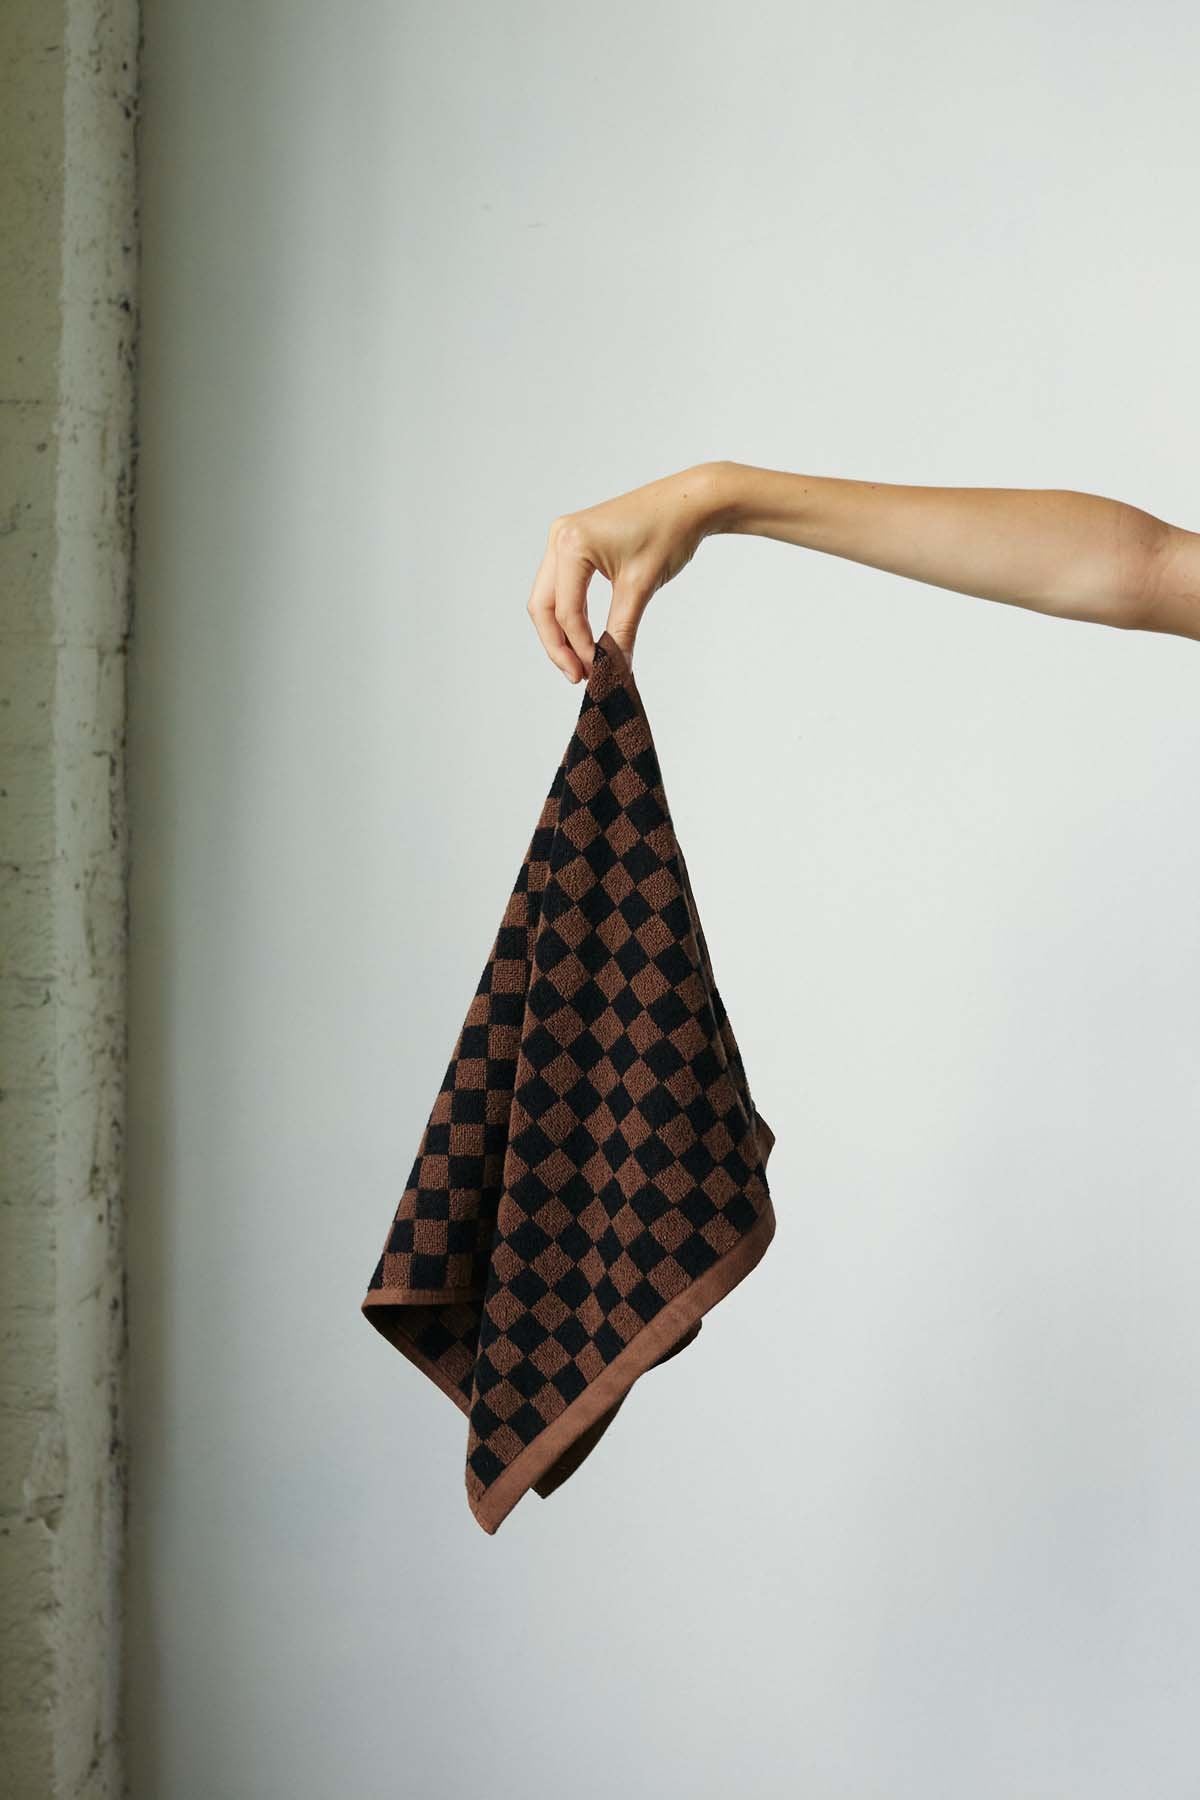 Josephine Hand towel in Tabac & Noir by Baina